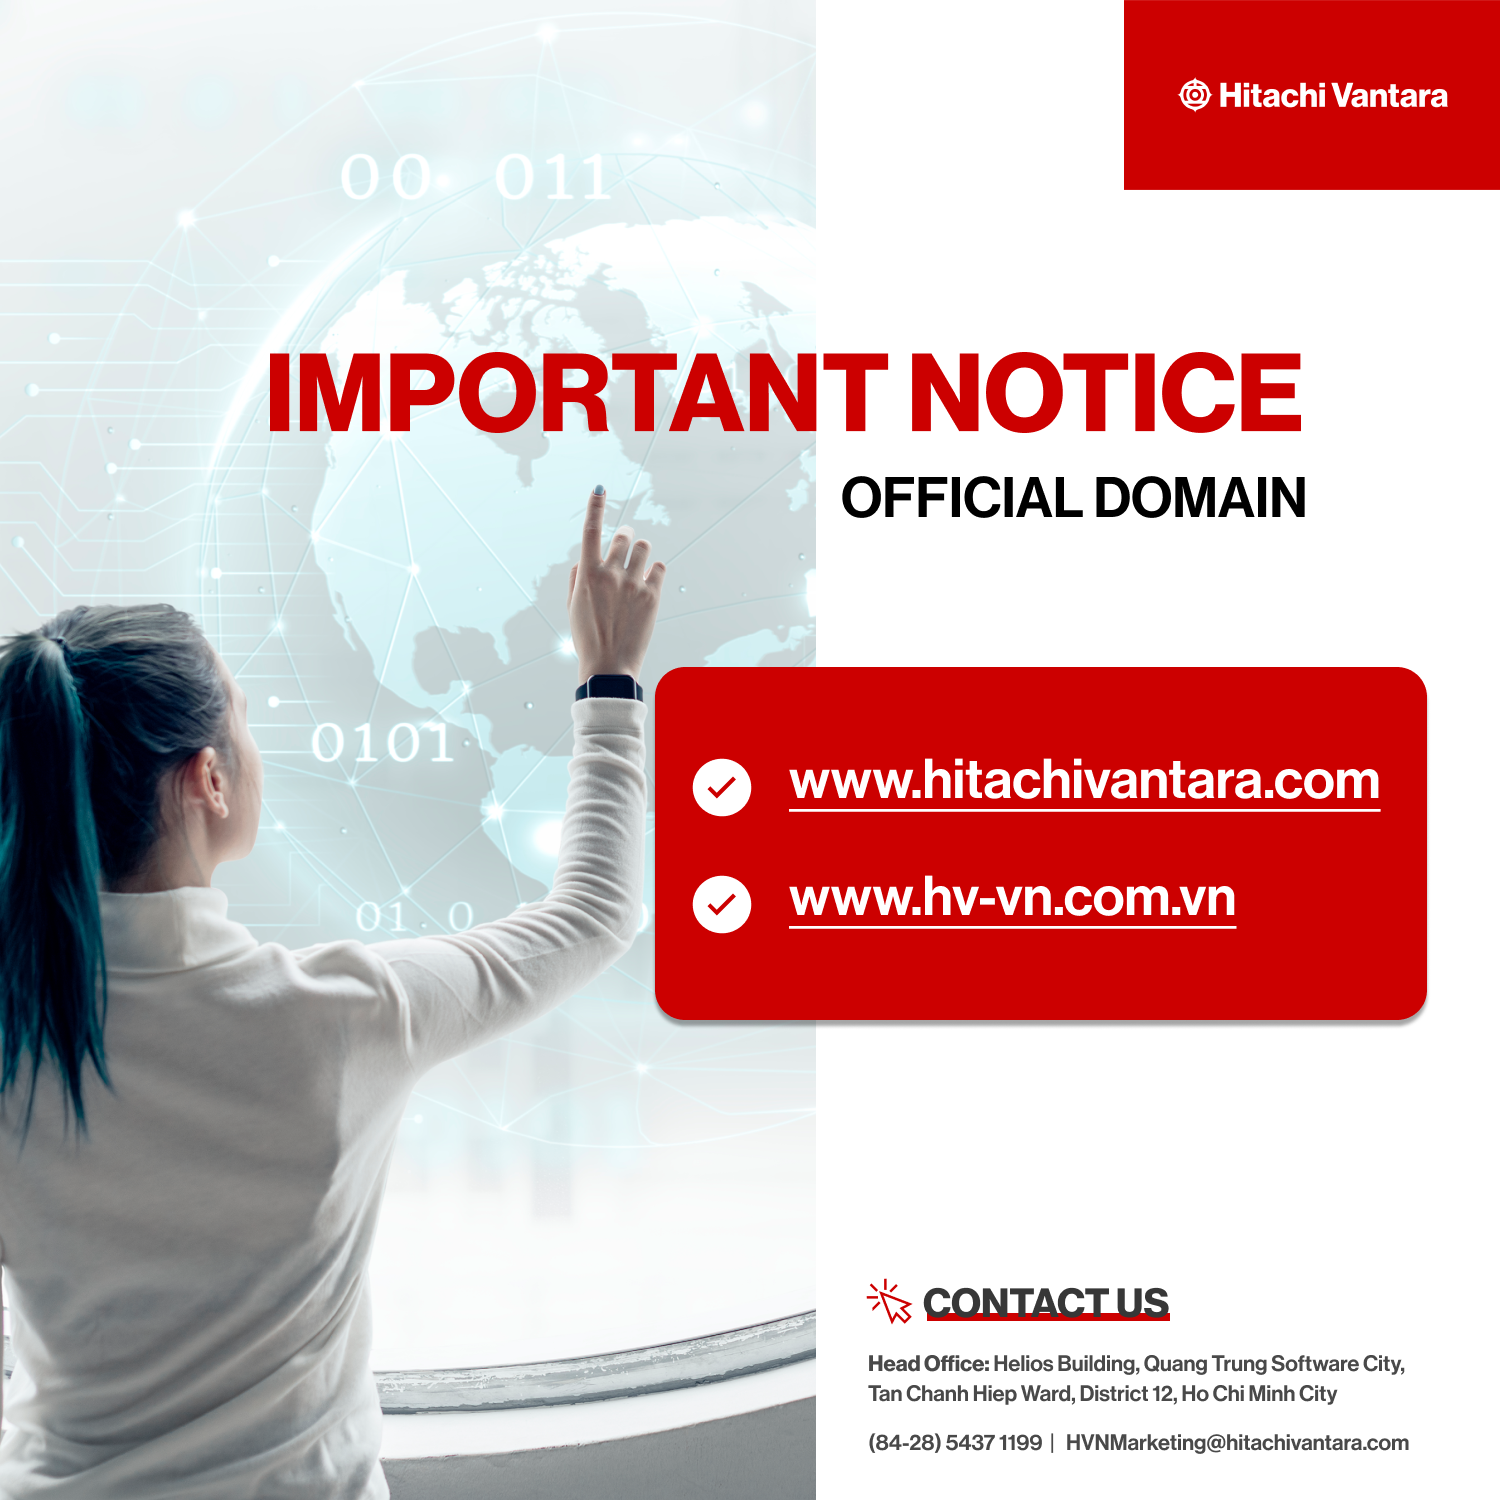 Official domain confirmation for Hitachi Vantara Vietnam